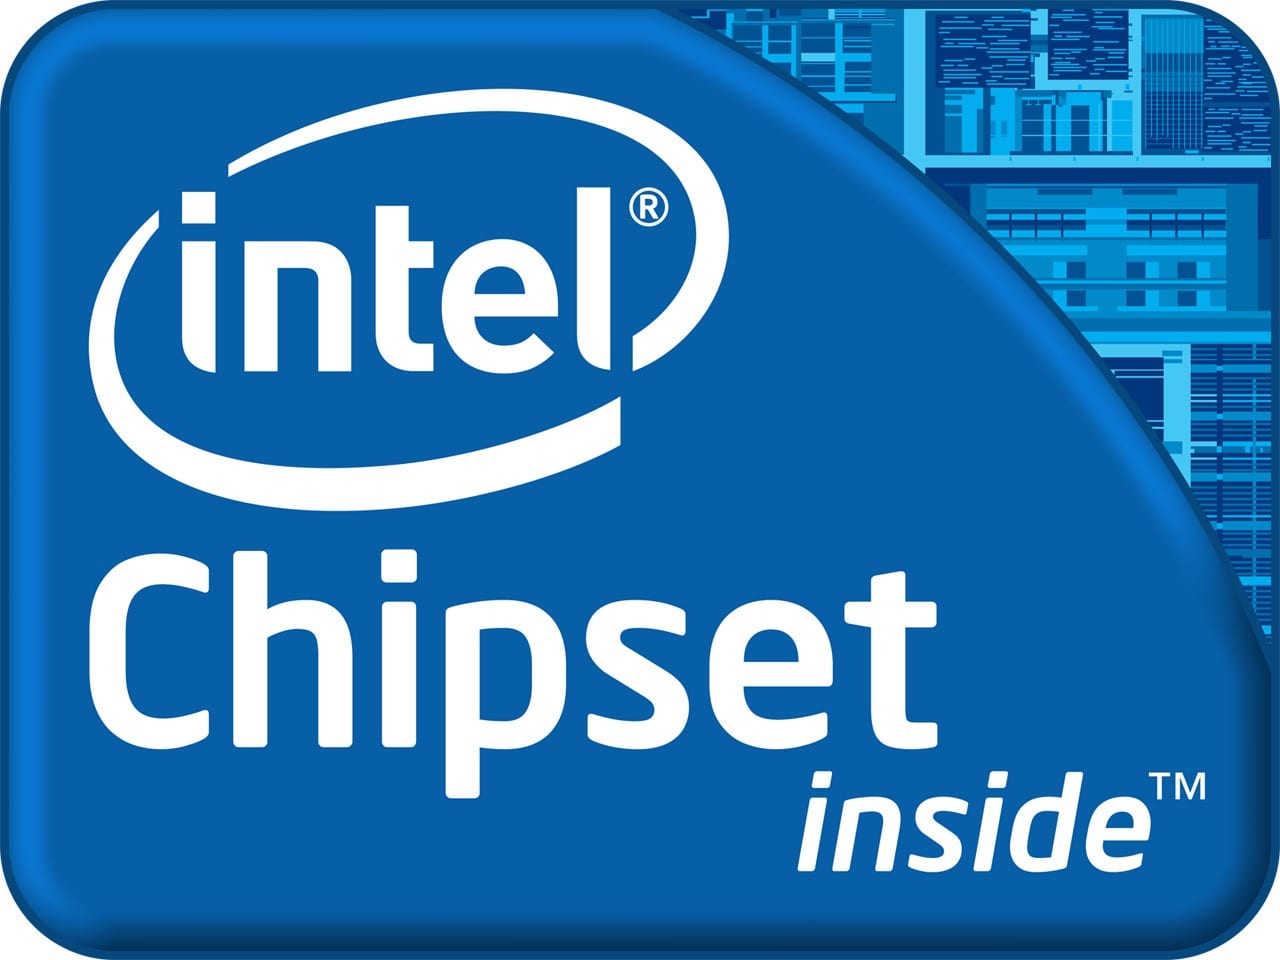 Интел логотип. Интел. Логотип Intel. Чипсеты Интел. Значок Интел инсайд.